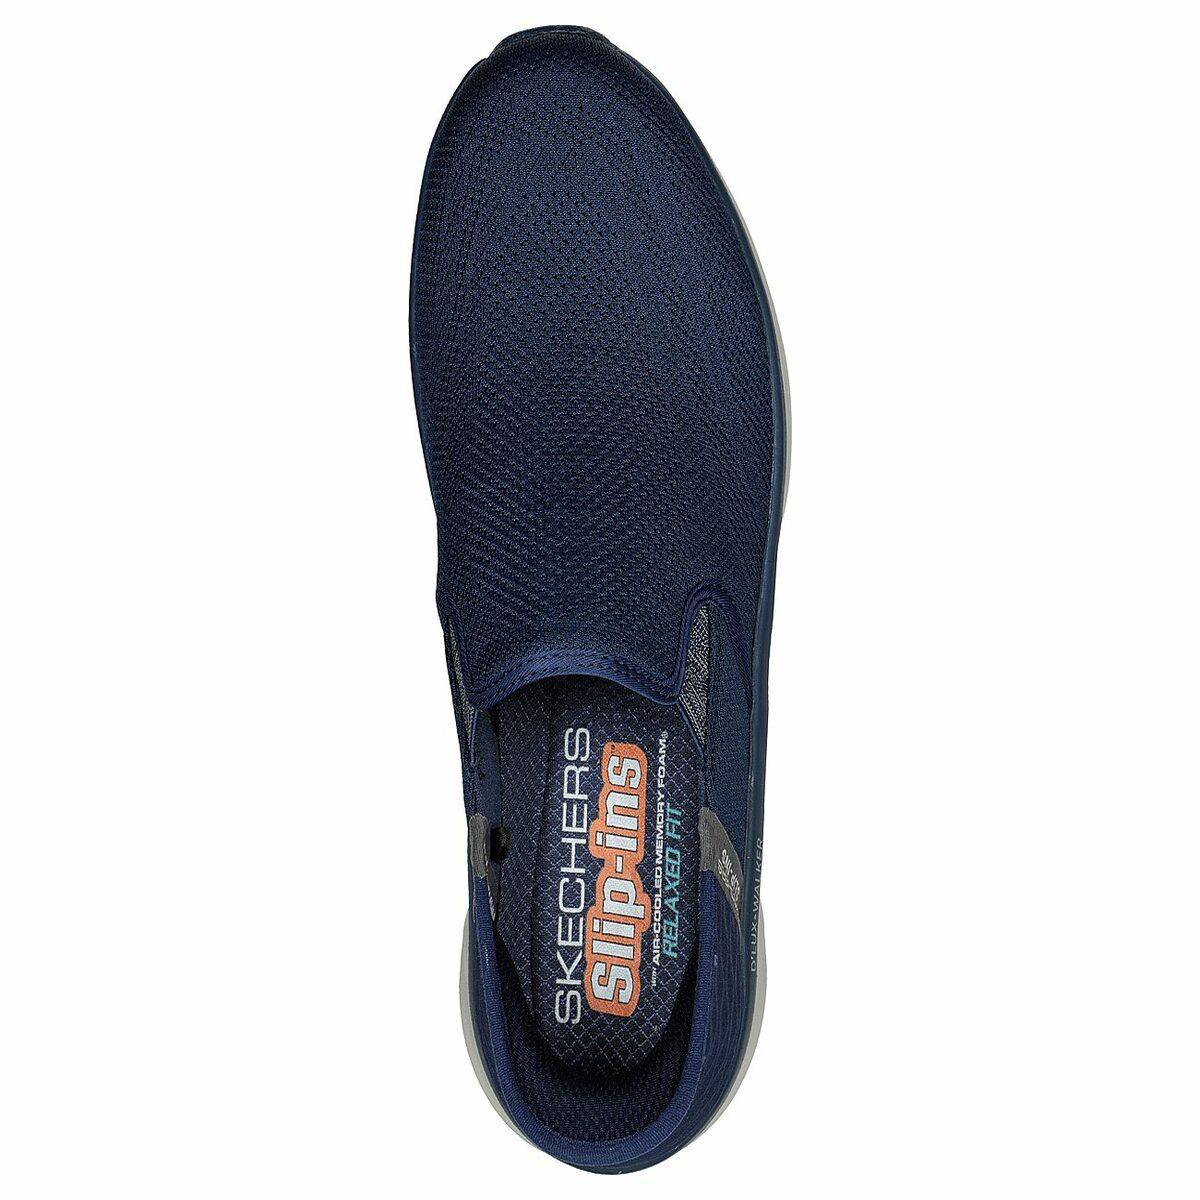 Buy Men Blue Sports Walking Shoes Online | SKU: 158-232455-17-10-Metro ...